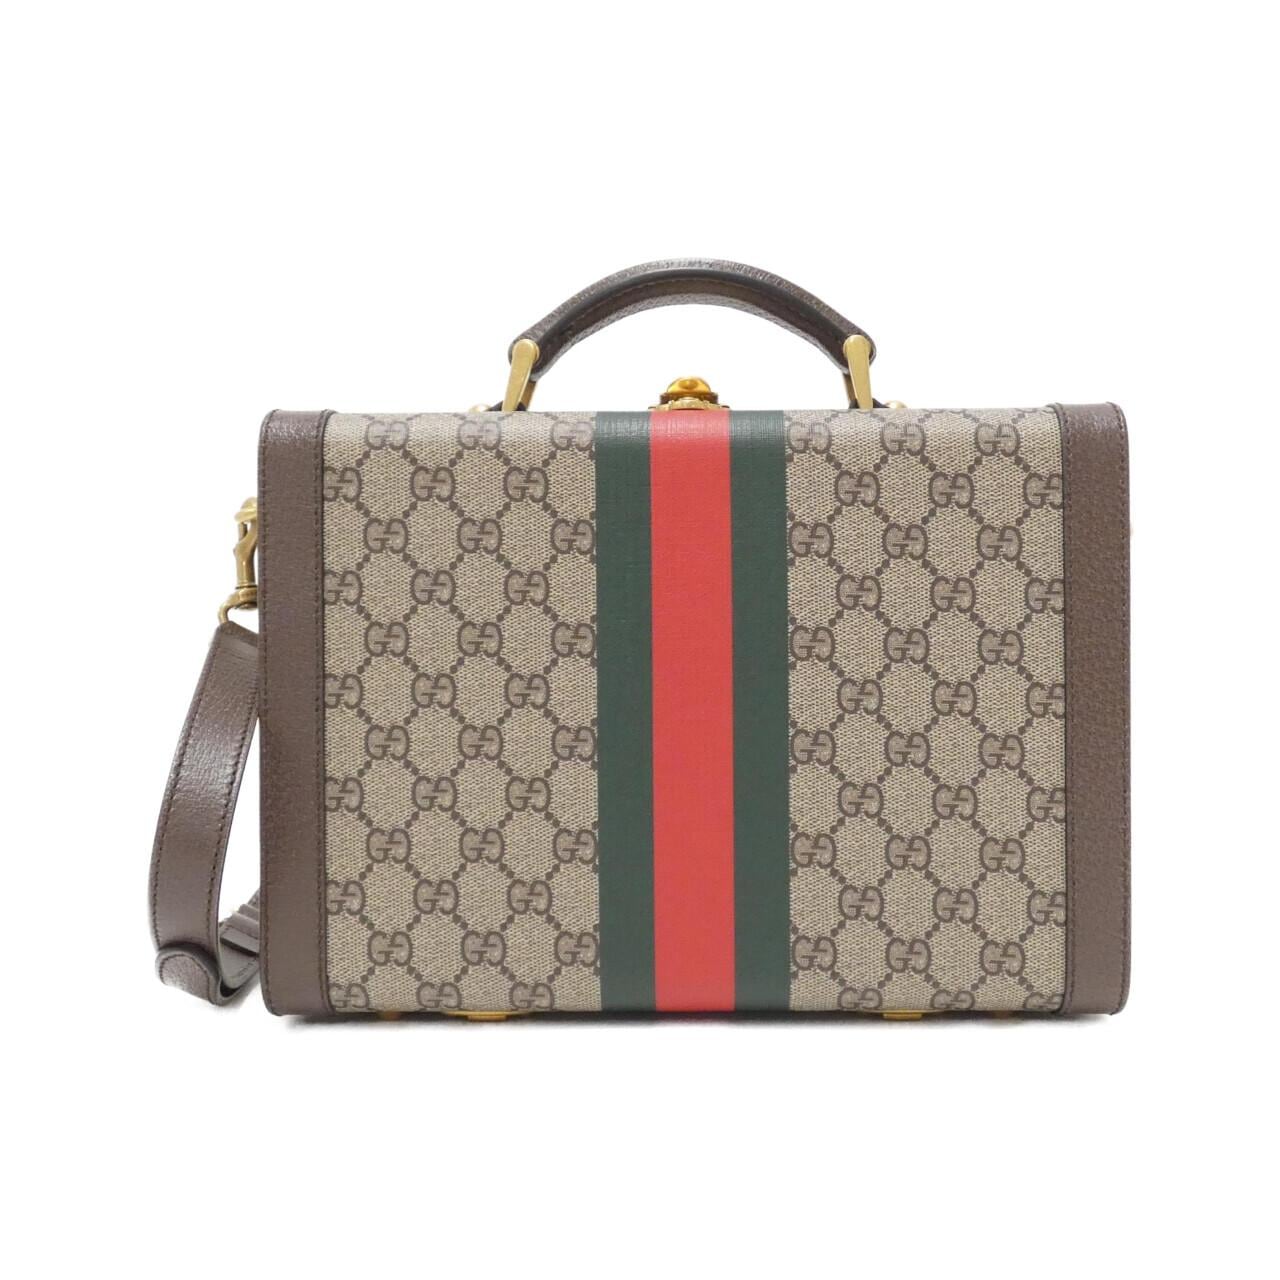 Gucci 722180 YGAT bag